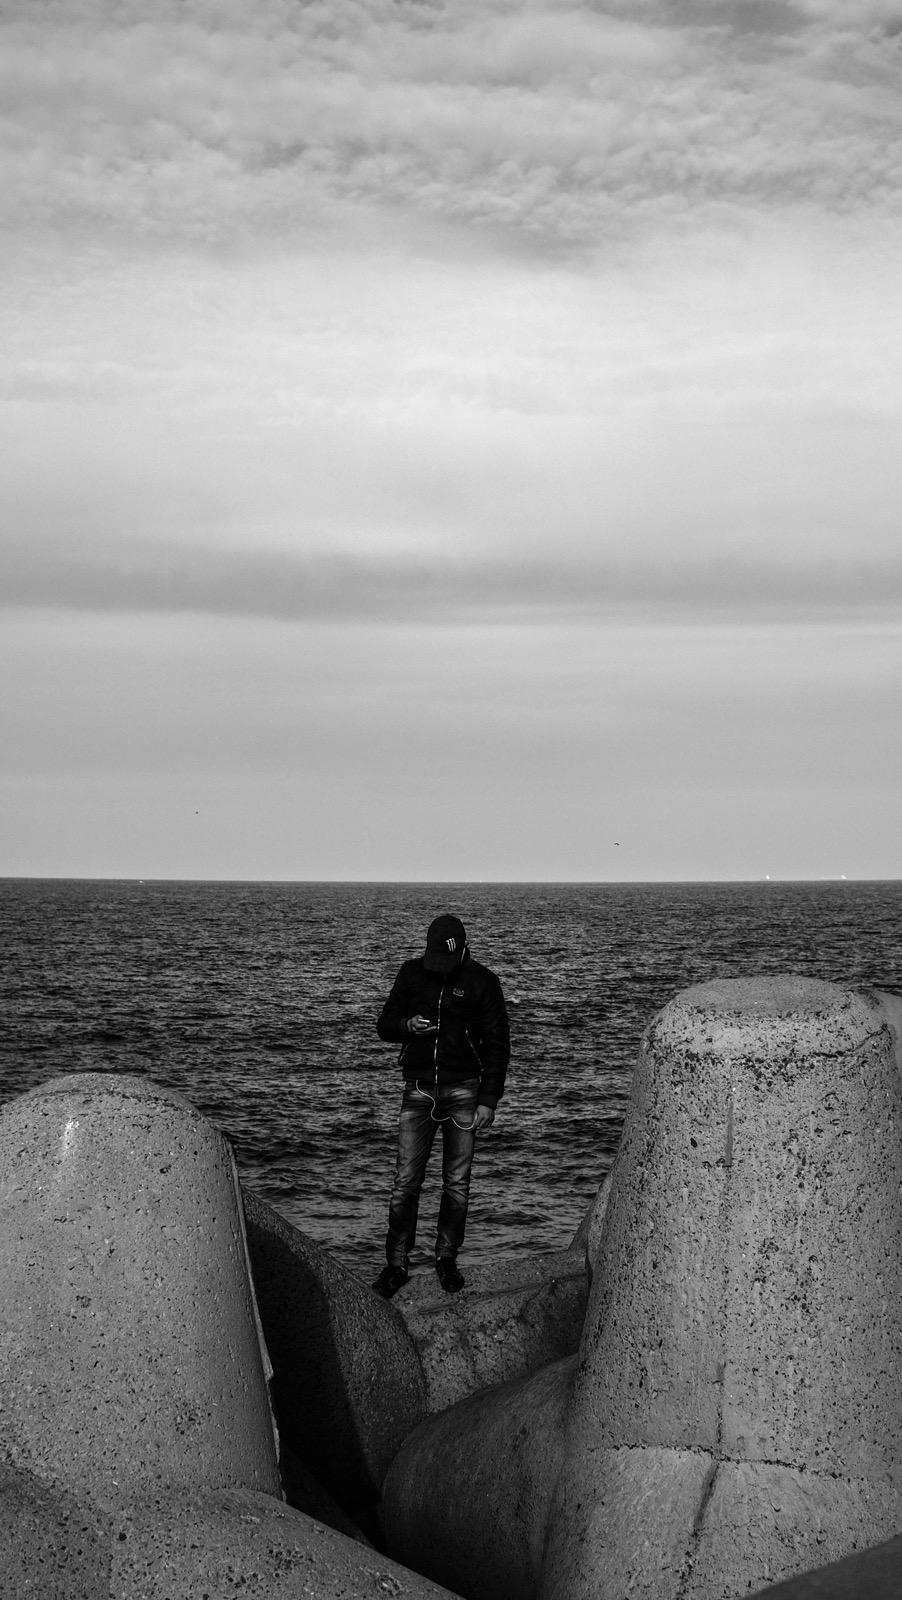 Alone by the Sea (Casablanca)